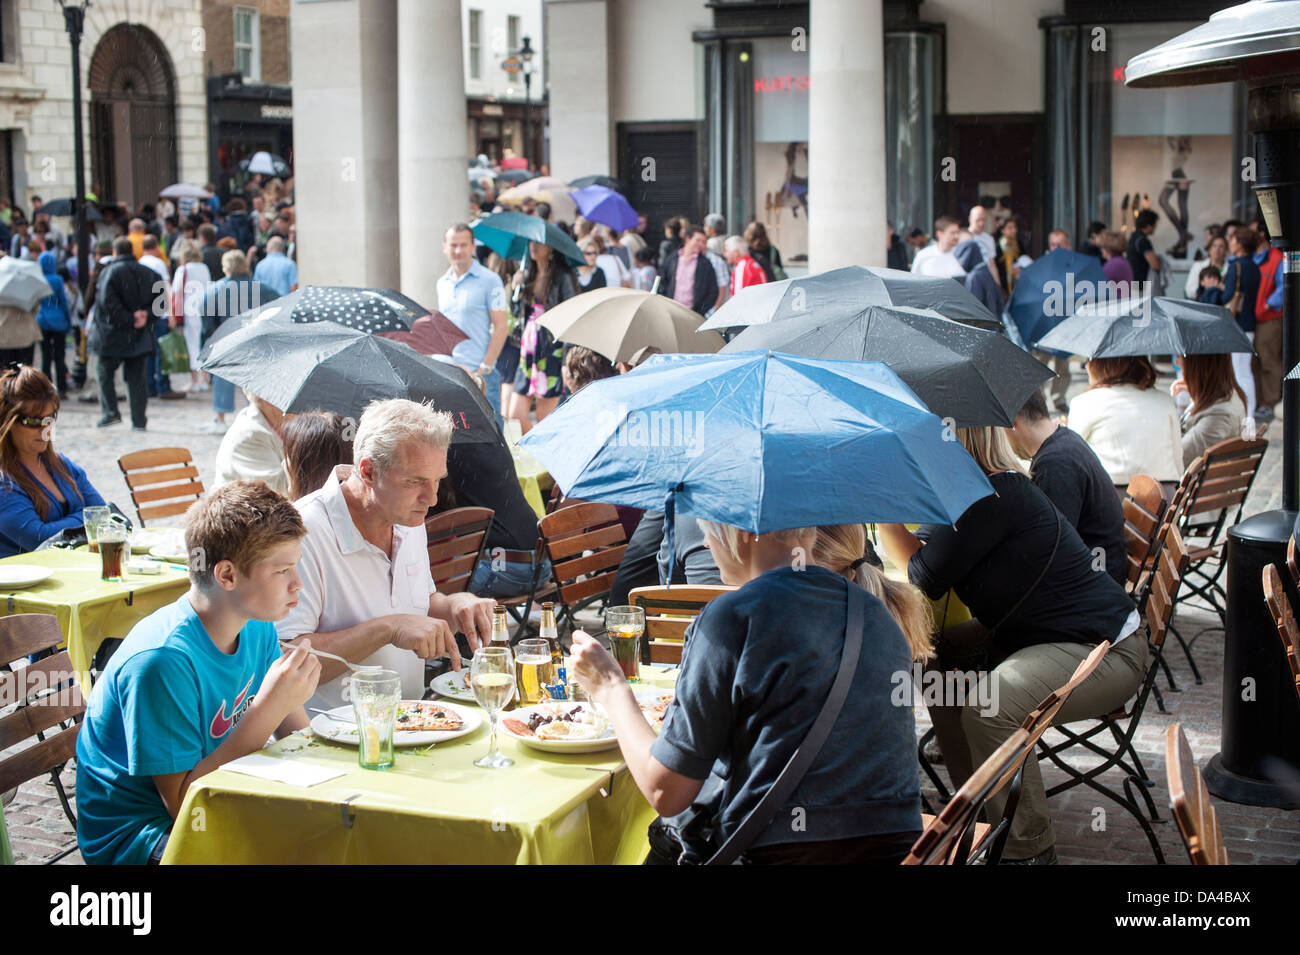 People eating al fresco in Covent garden under umbrellas  during rain shower Stock Photo